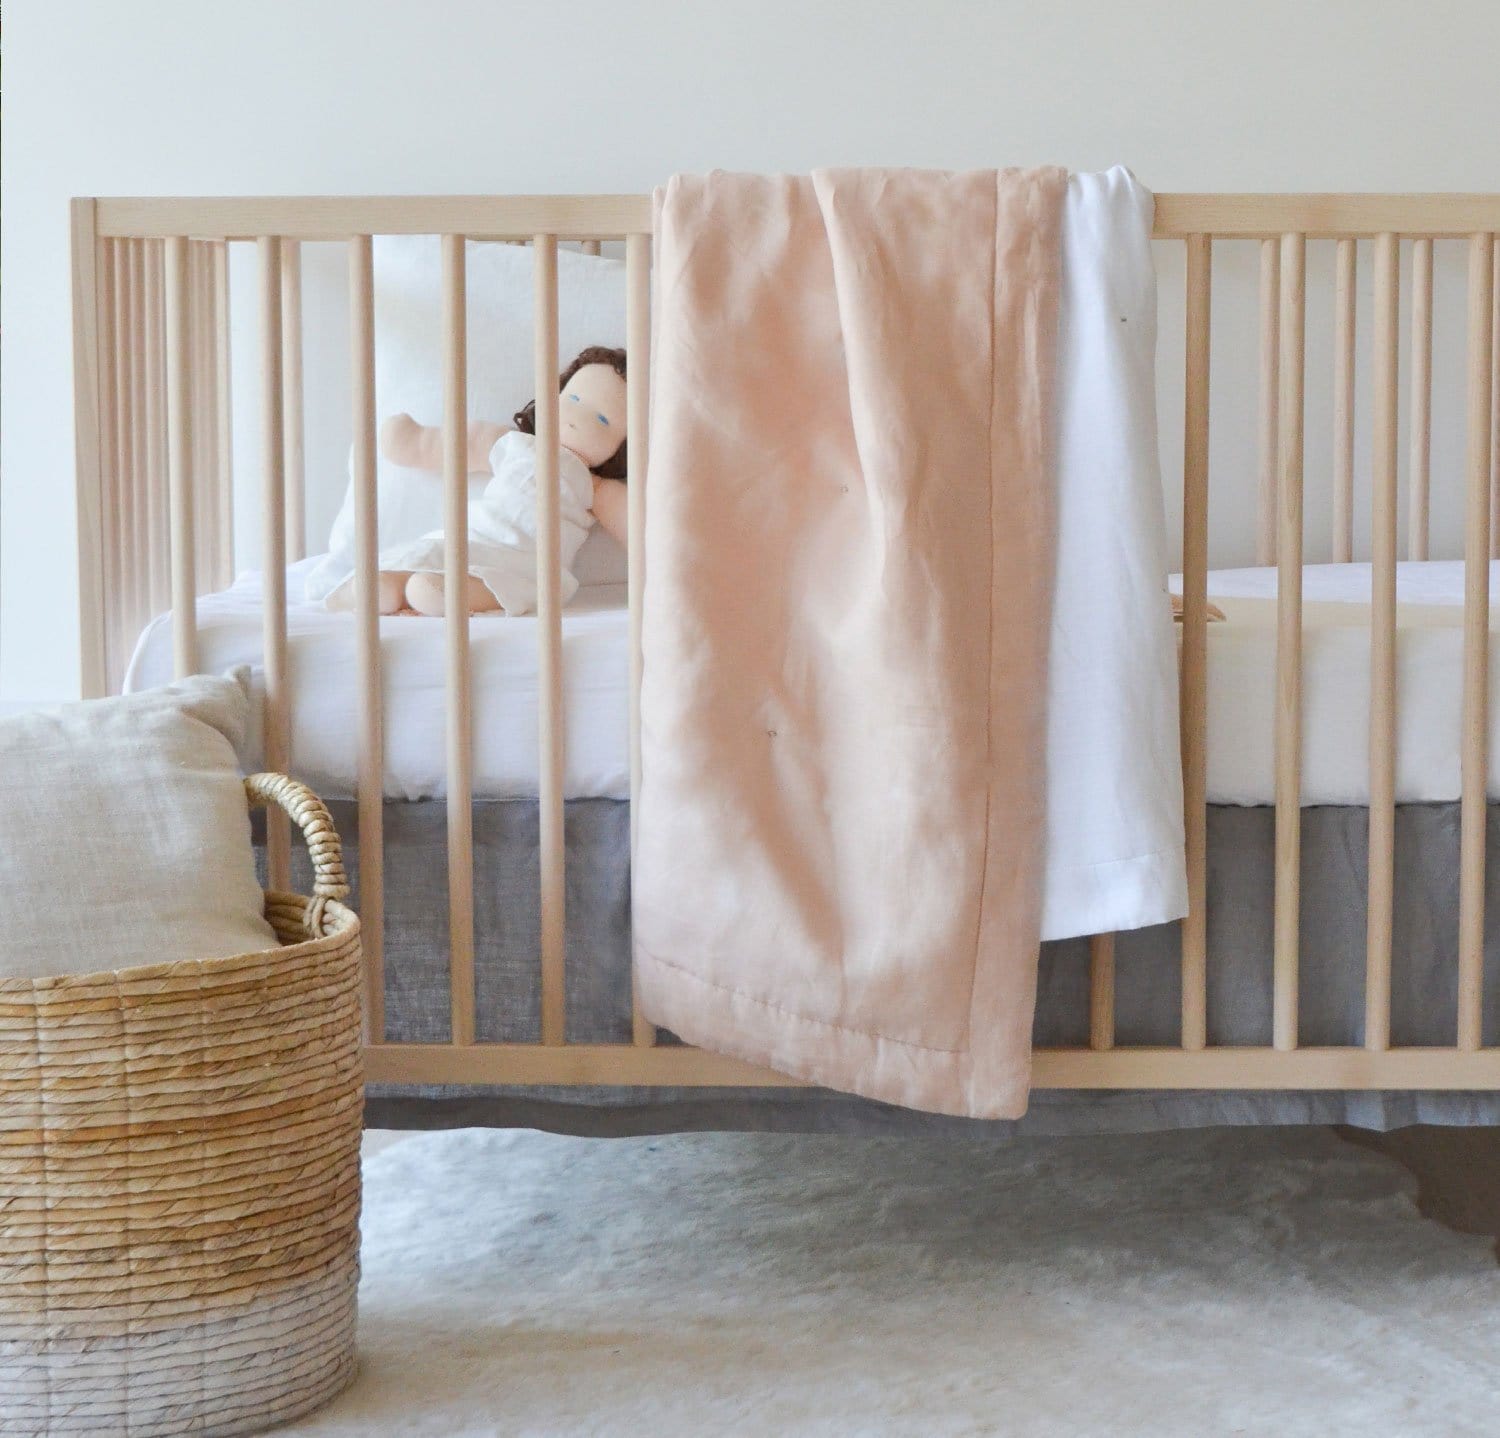 crib linen